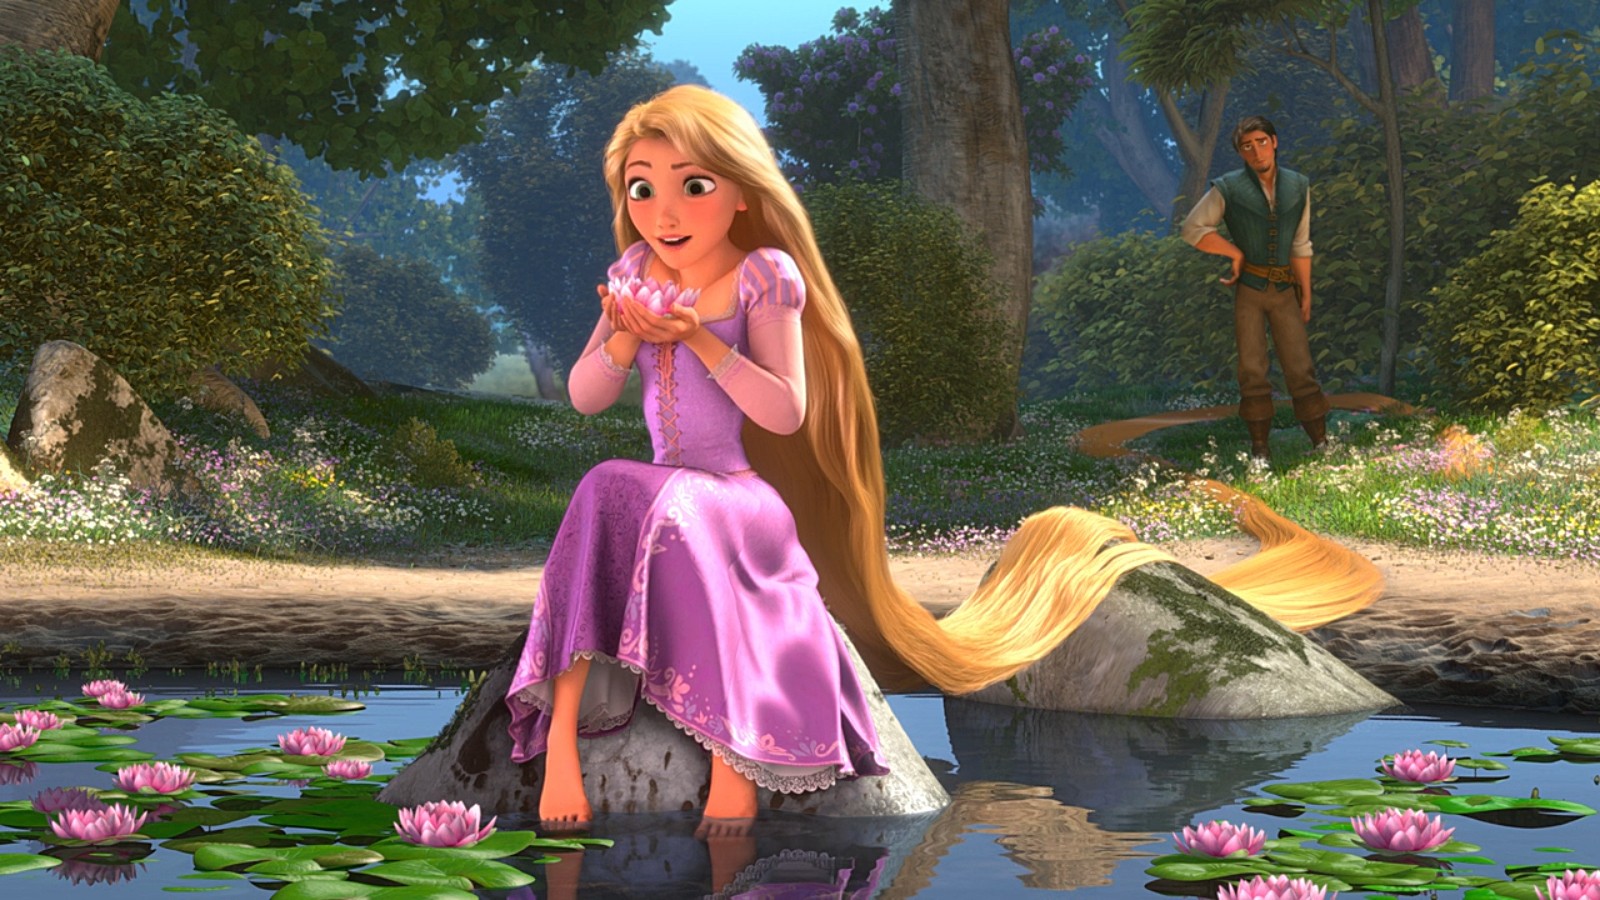 General 1600x900 Tangled Rapunzel barefoot flowers blonde long hair movies Disney animated movies women film stills